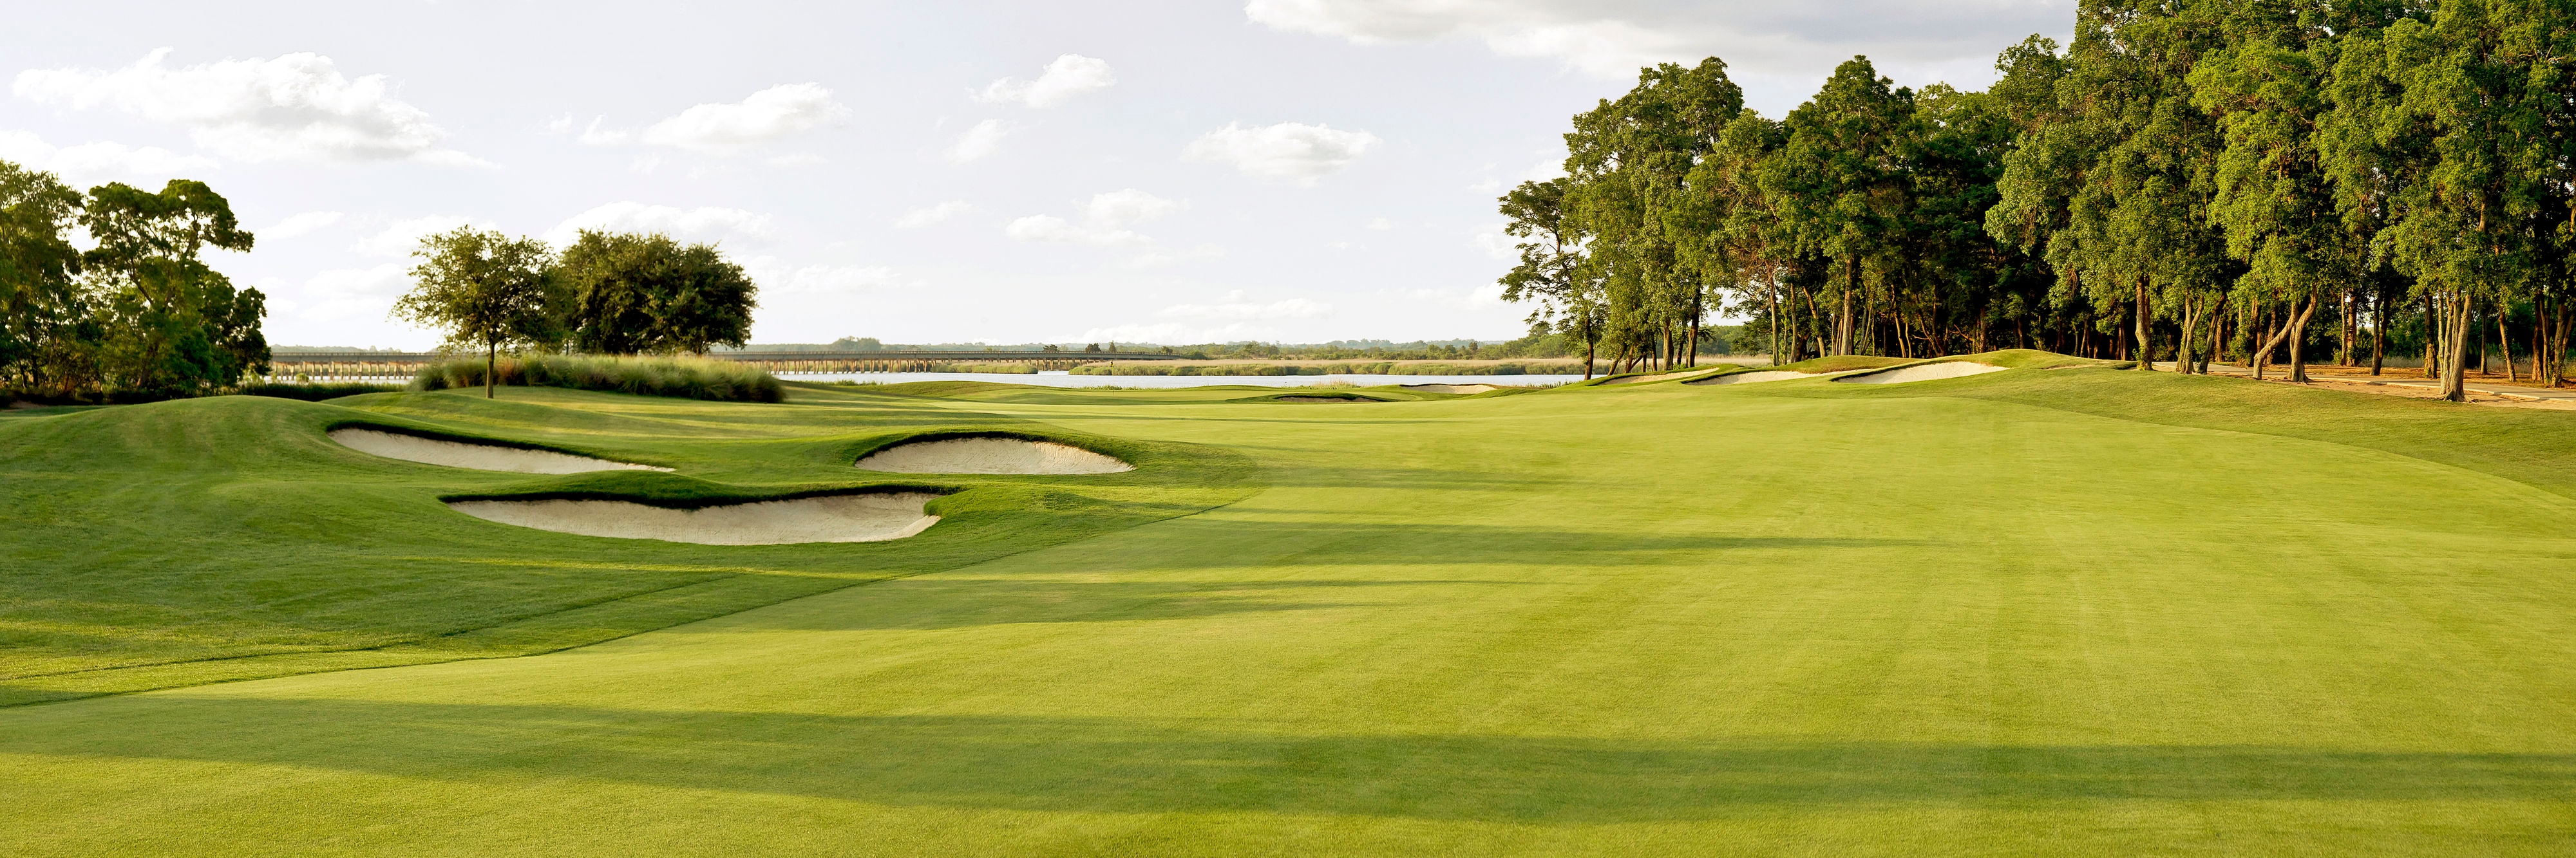 Golf Course at Savannah Harbor